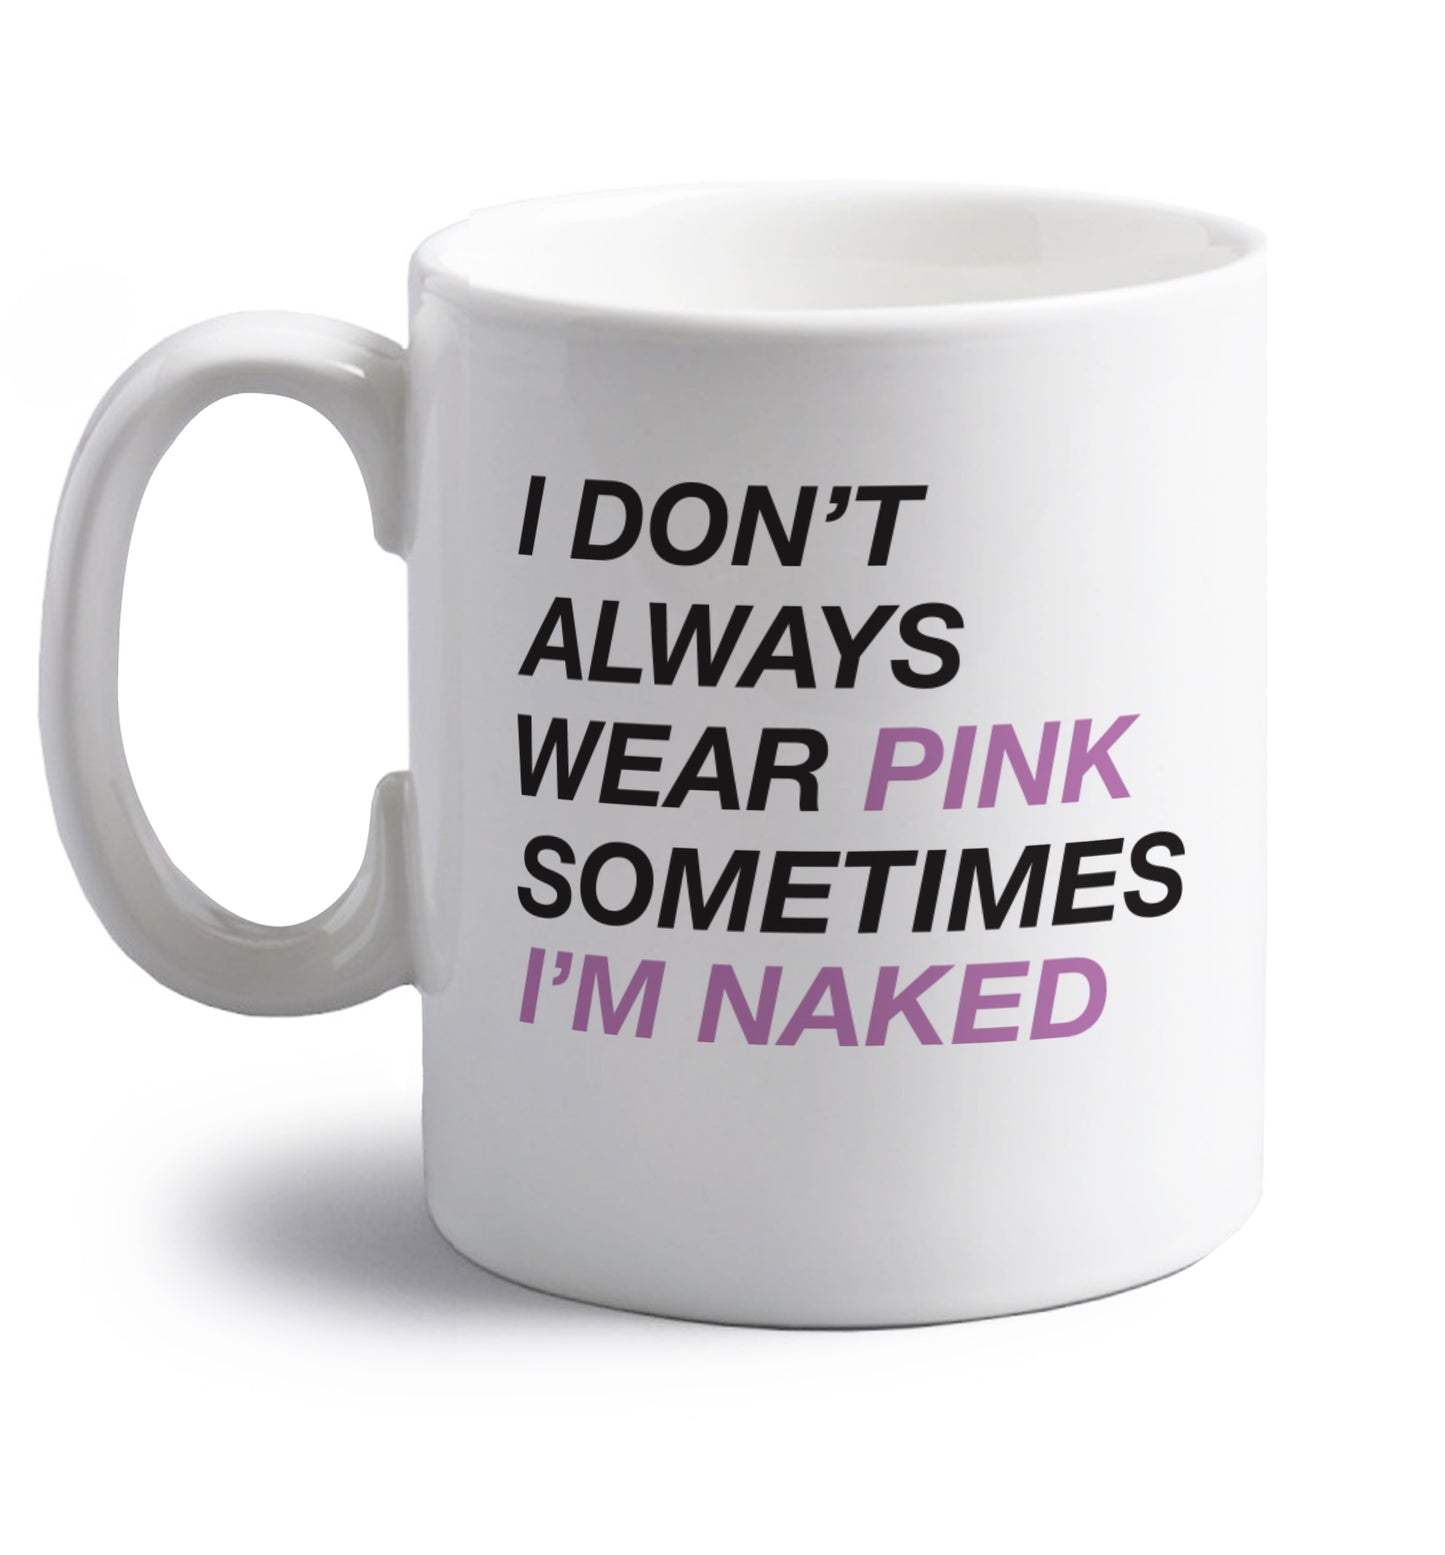 I don't always wear pink sometimes I'm naked right handed white ceramic mug 